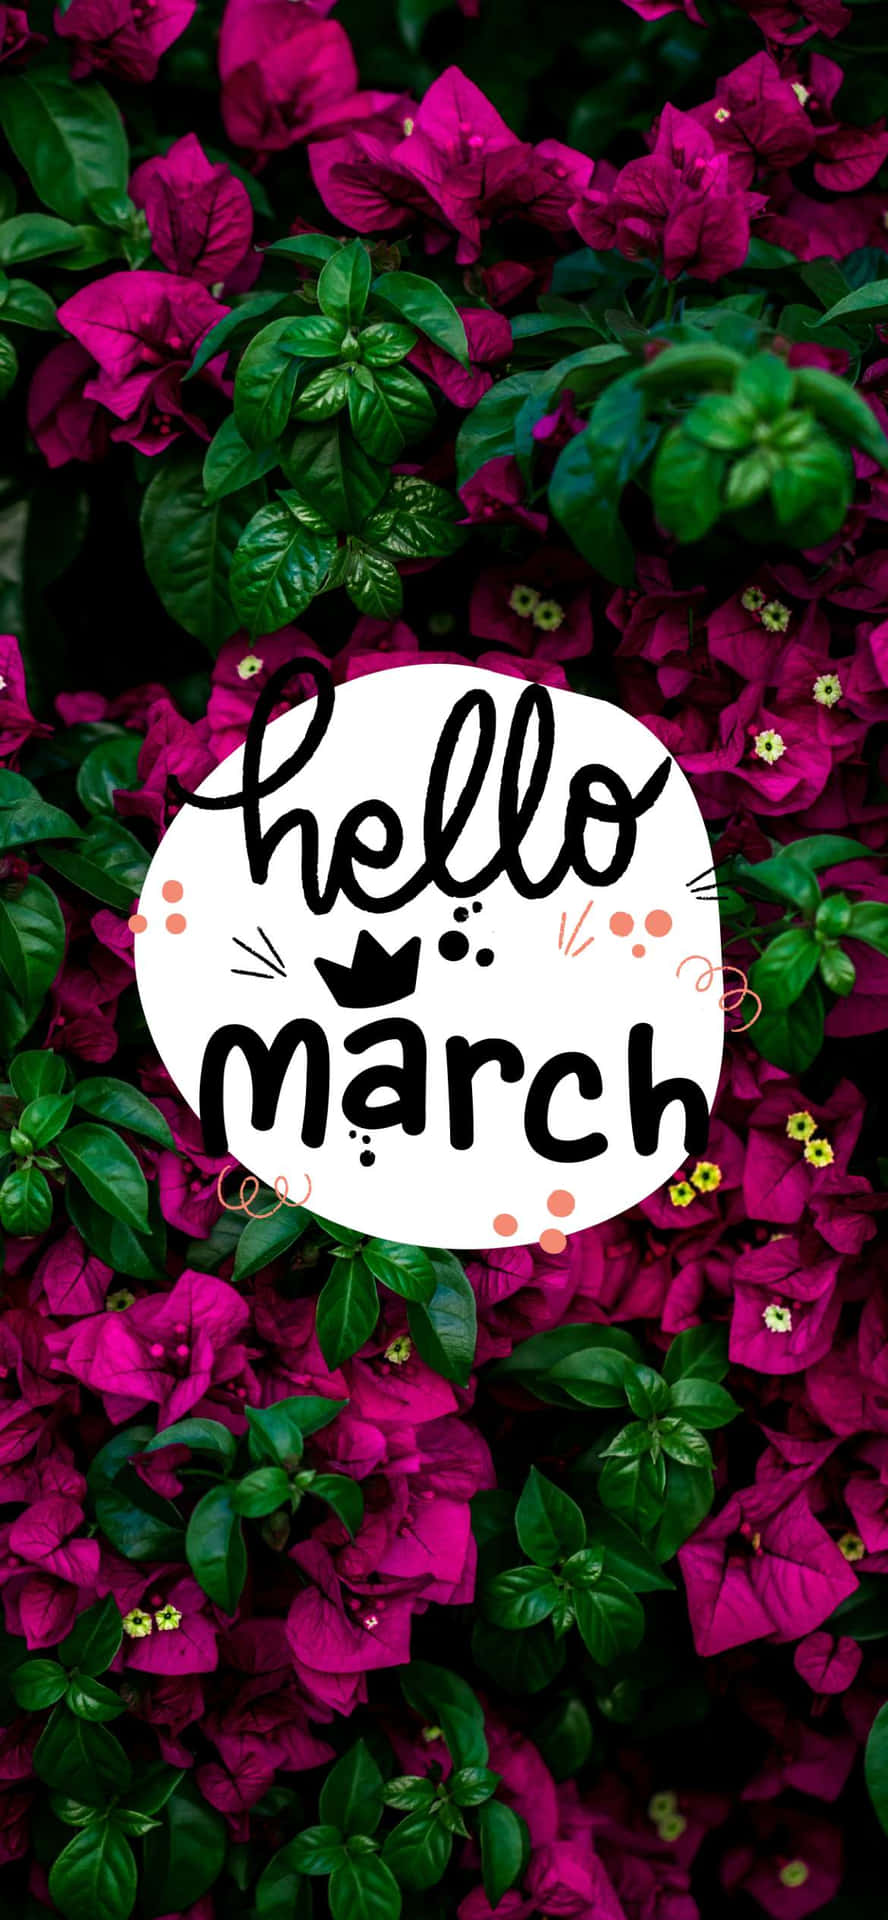 Hello March Bougainvillea Bush With Flowers Wallpaper